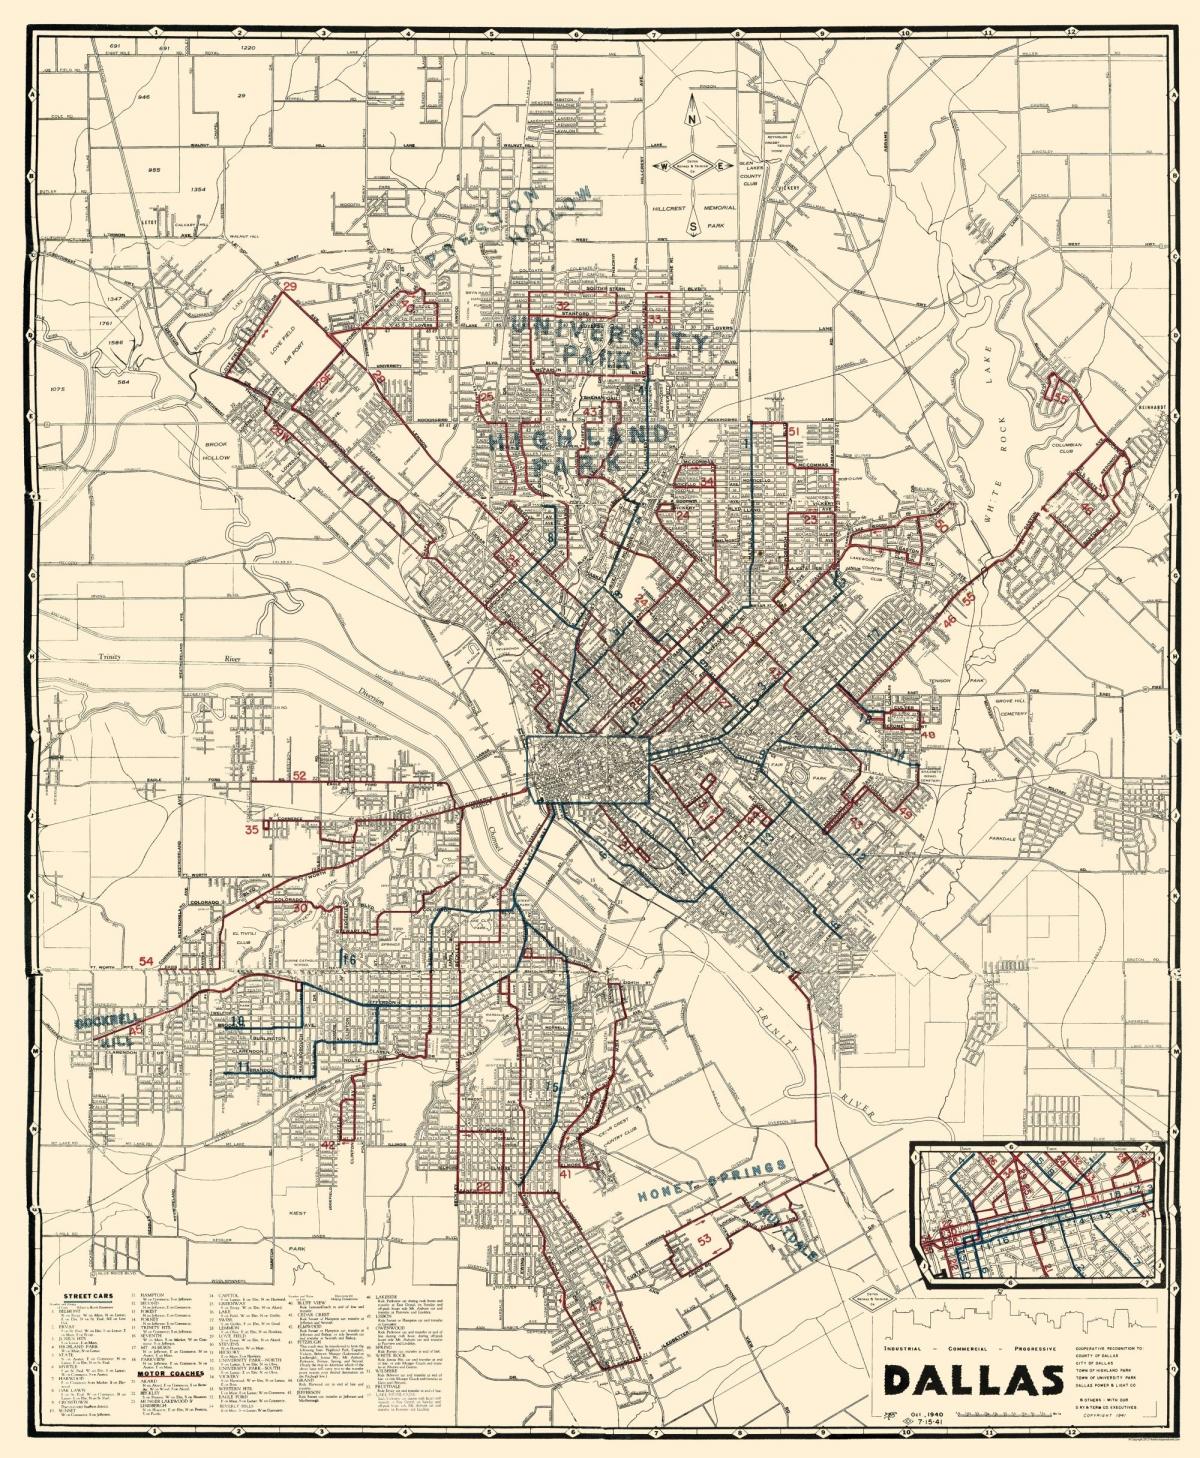 Dallas historical map